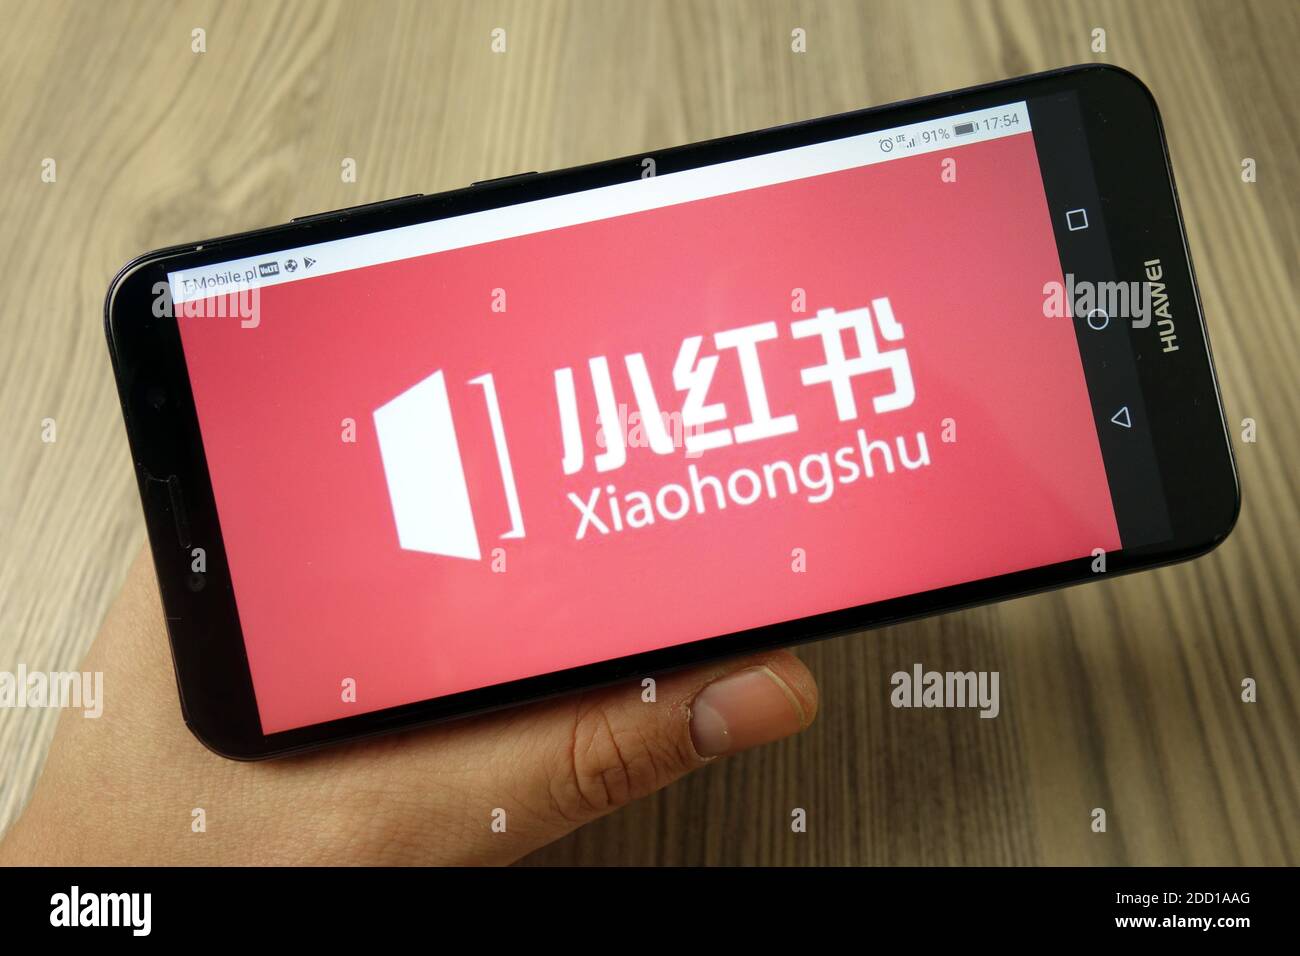 KONSKIE, POLAND - November 24, 2019: Xiaohongshu platform logo displayed on mobile phone Stock Photo